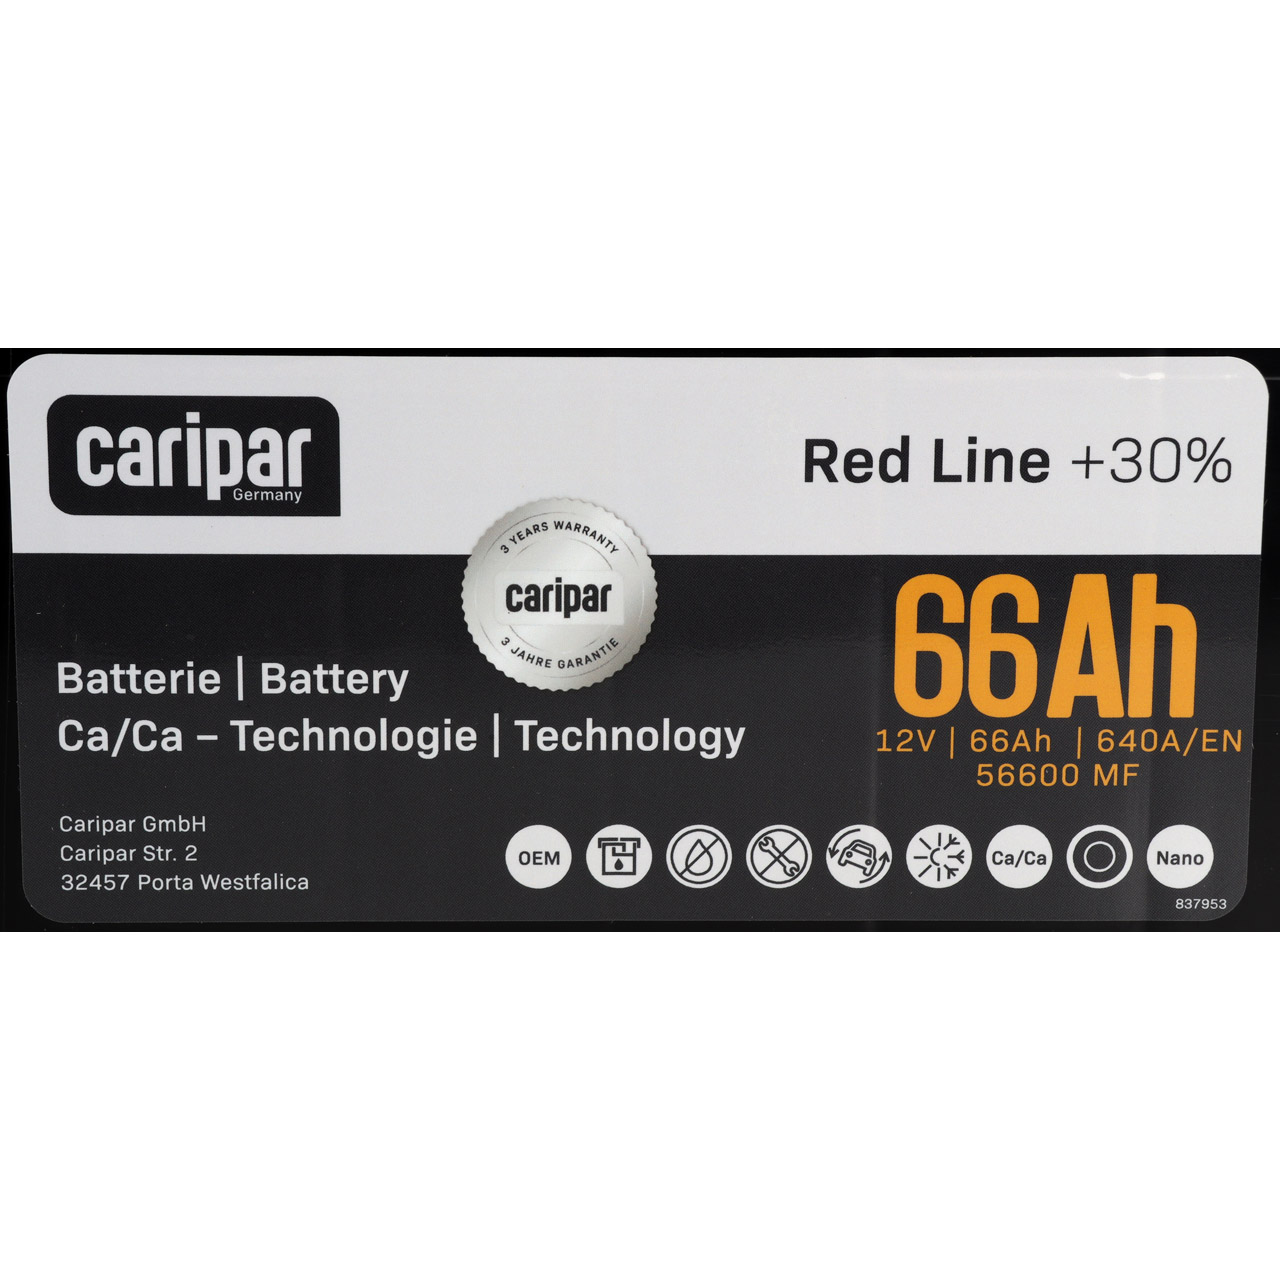 CARIPAR RED LINE +30% PKW KFZ Autobatterie Starterbatterie 12V 66Ah 640A/EN B13